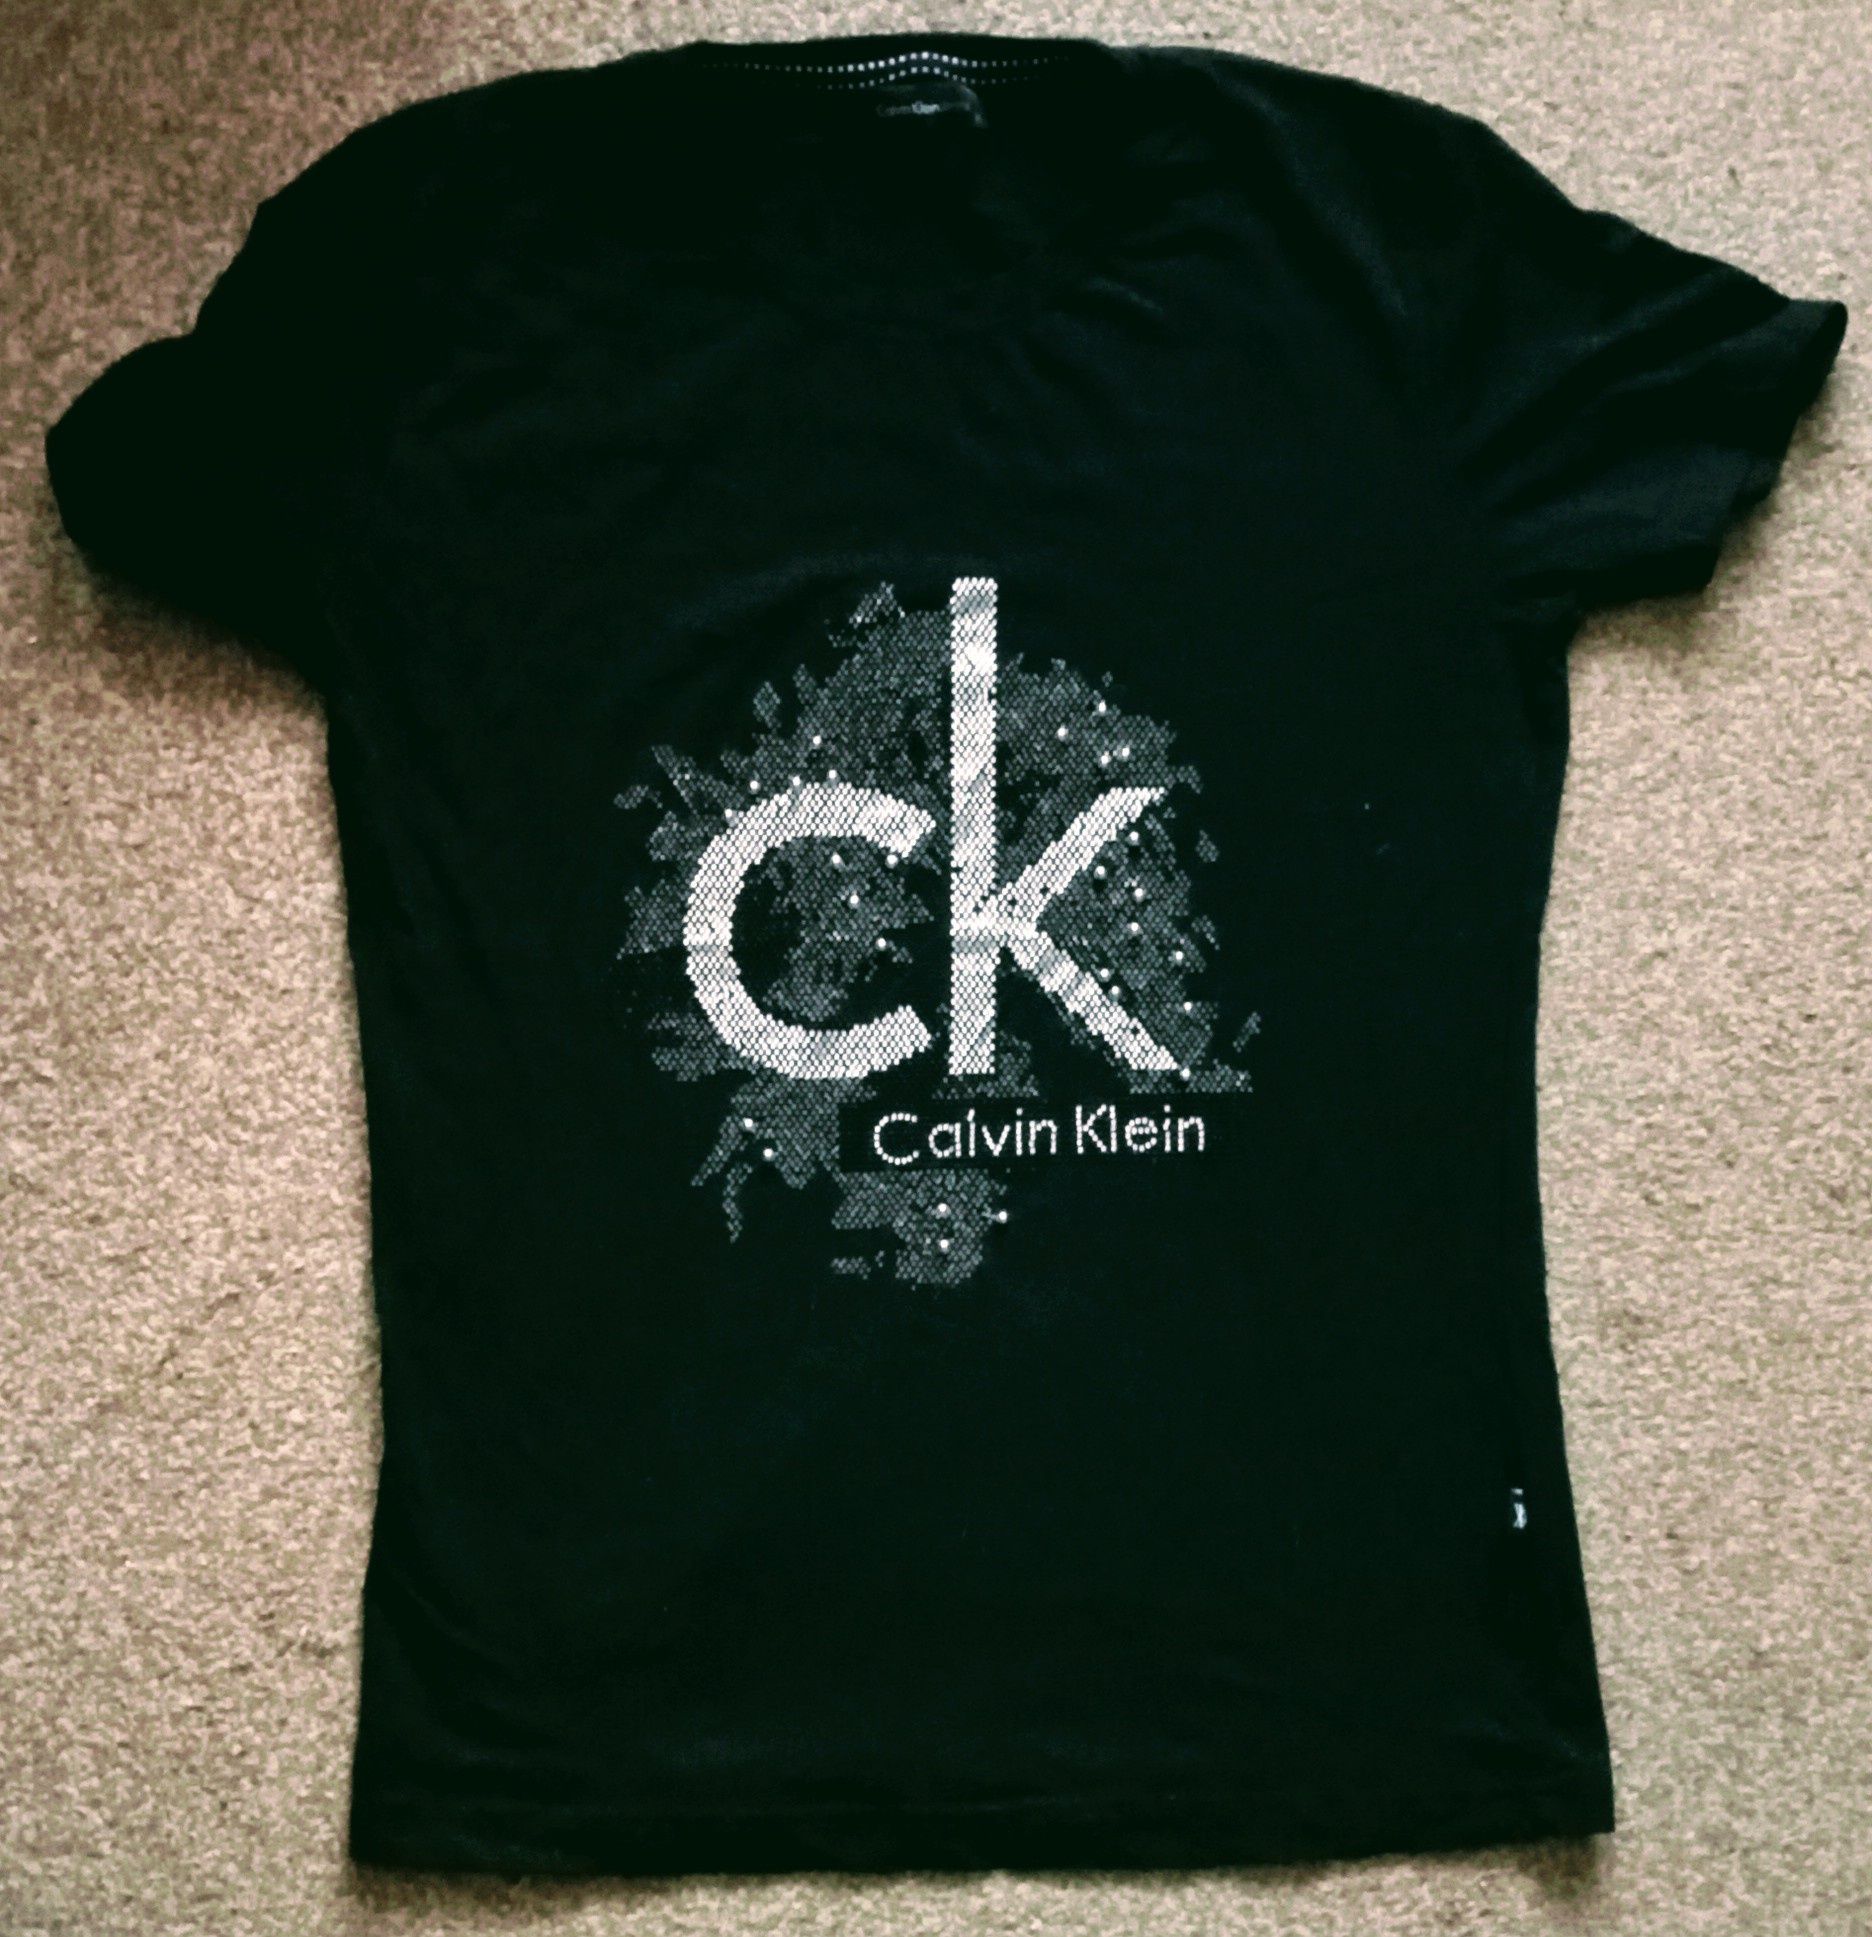 T- shirt damski CK , rozmiar S/M,nowa